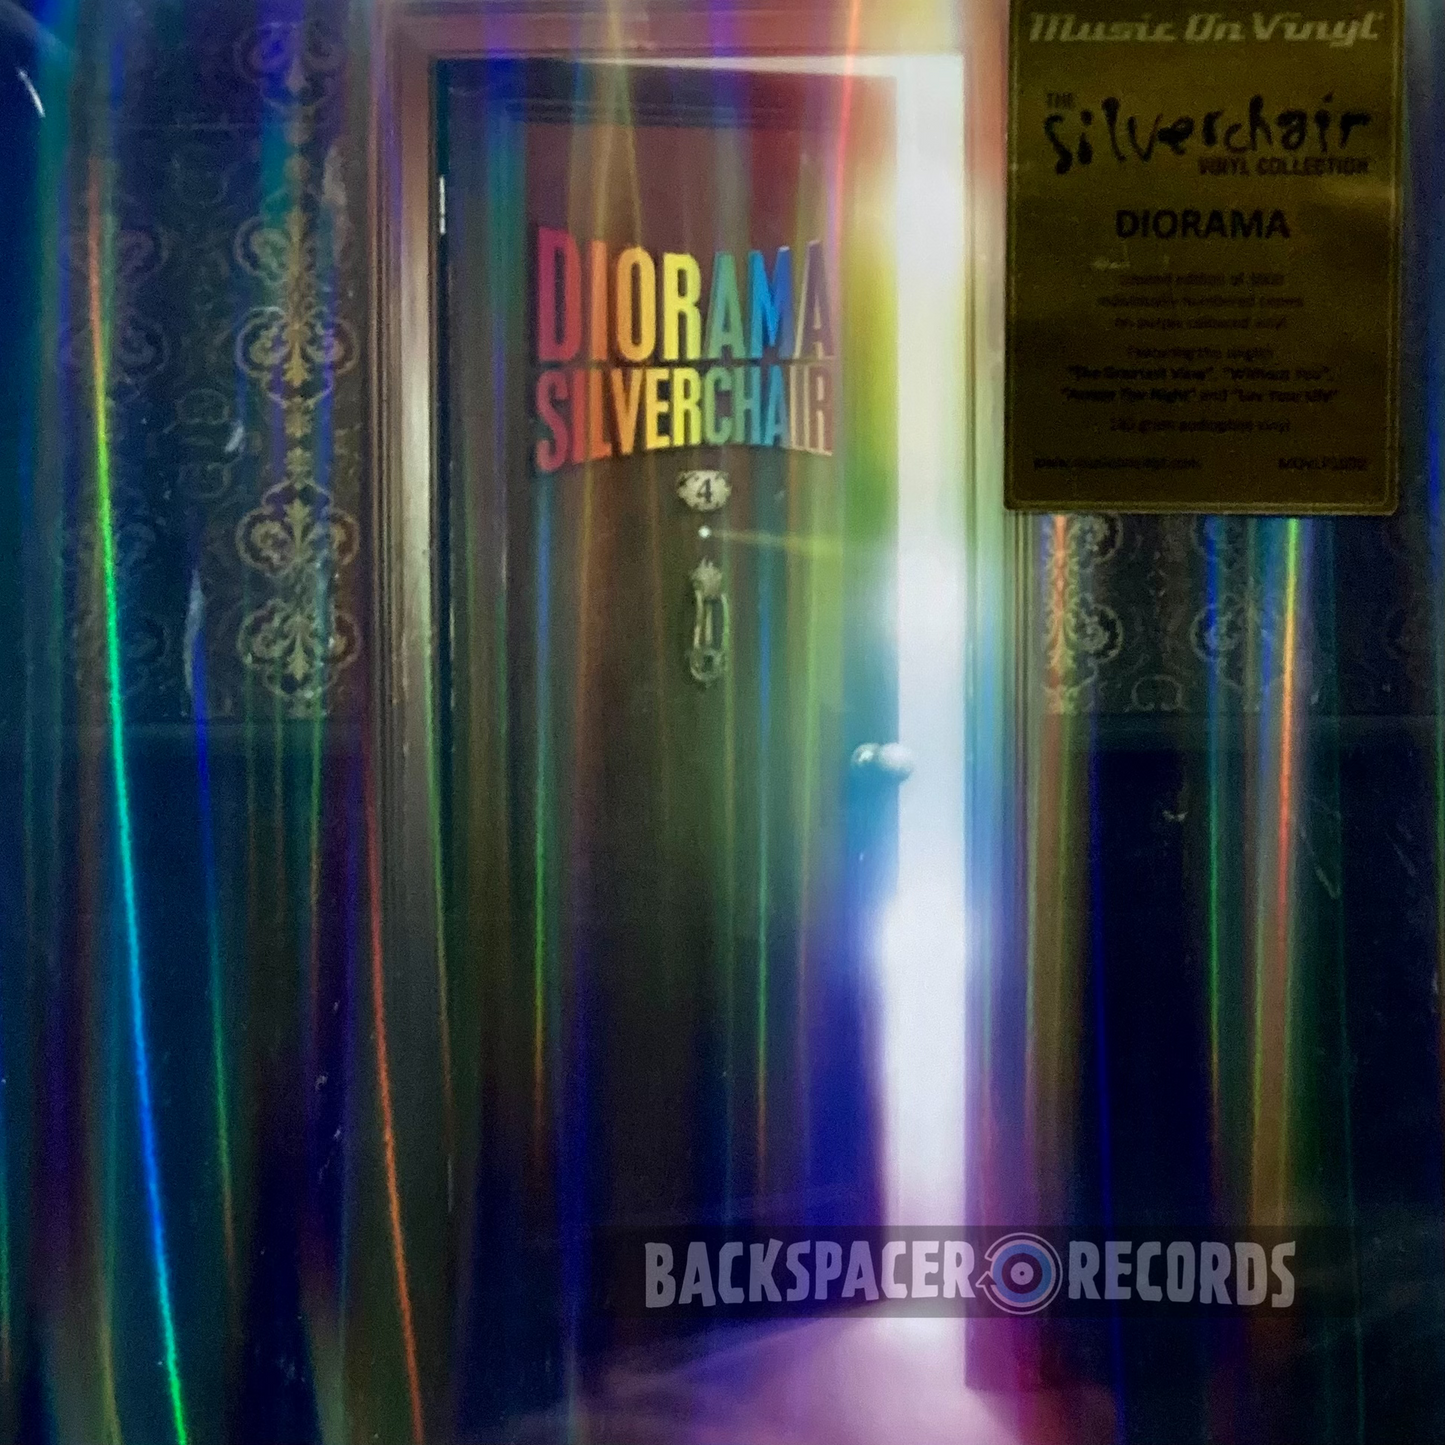 Silverchair - Diorama (Limited Edition) LP (MOV)